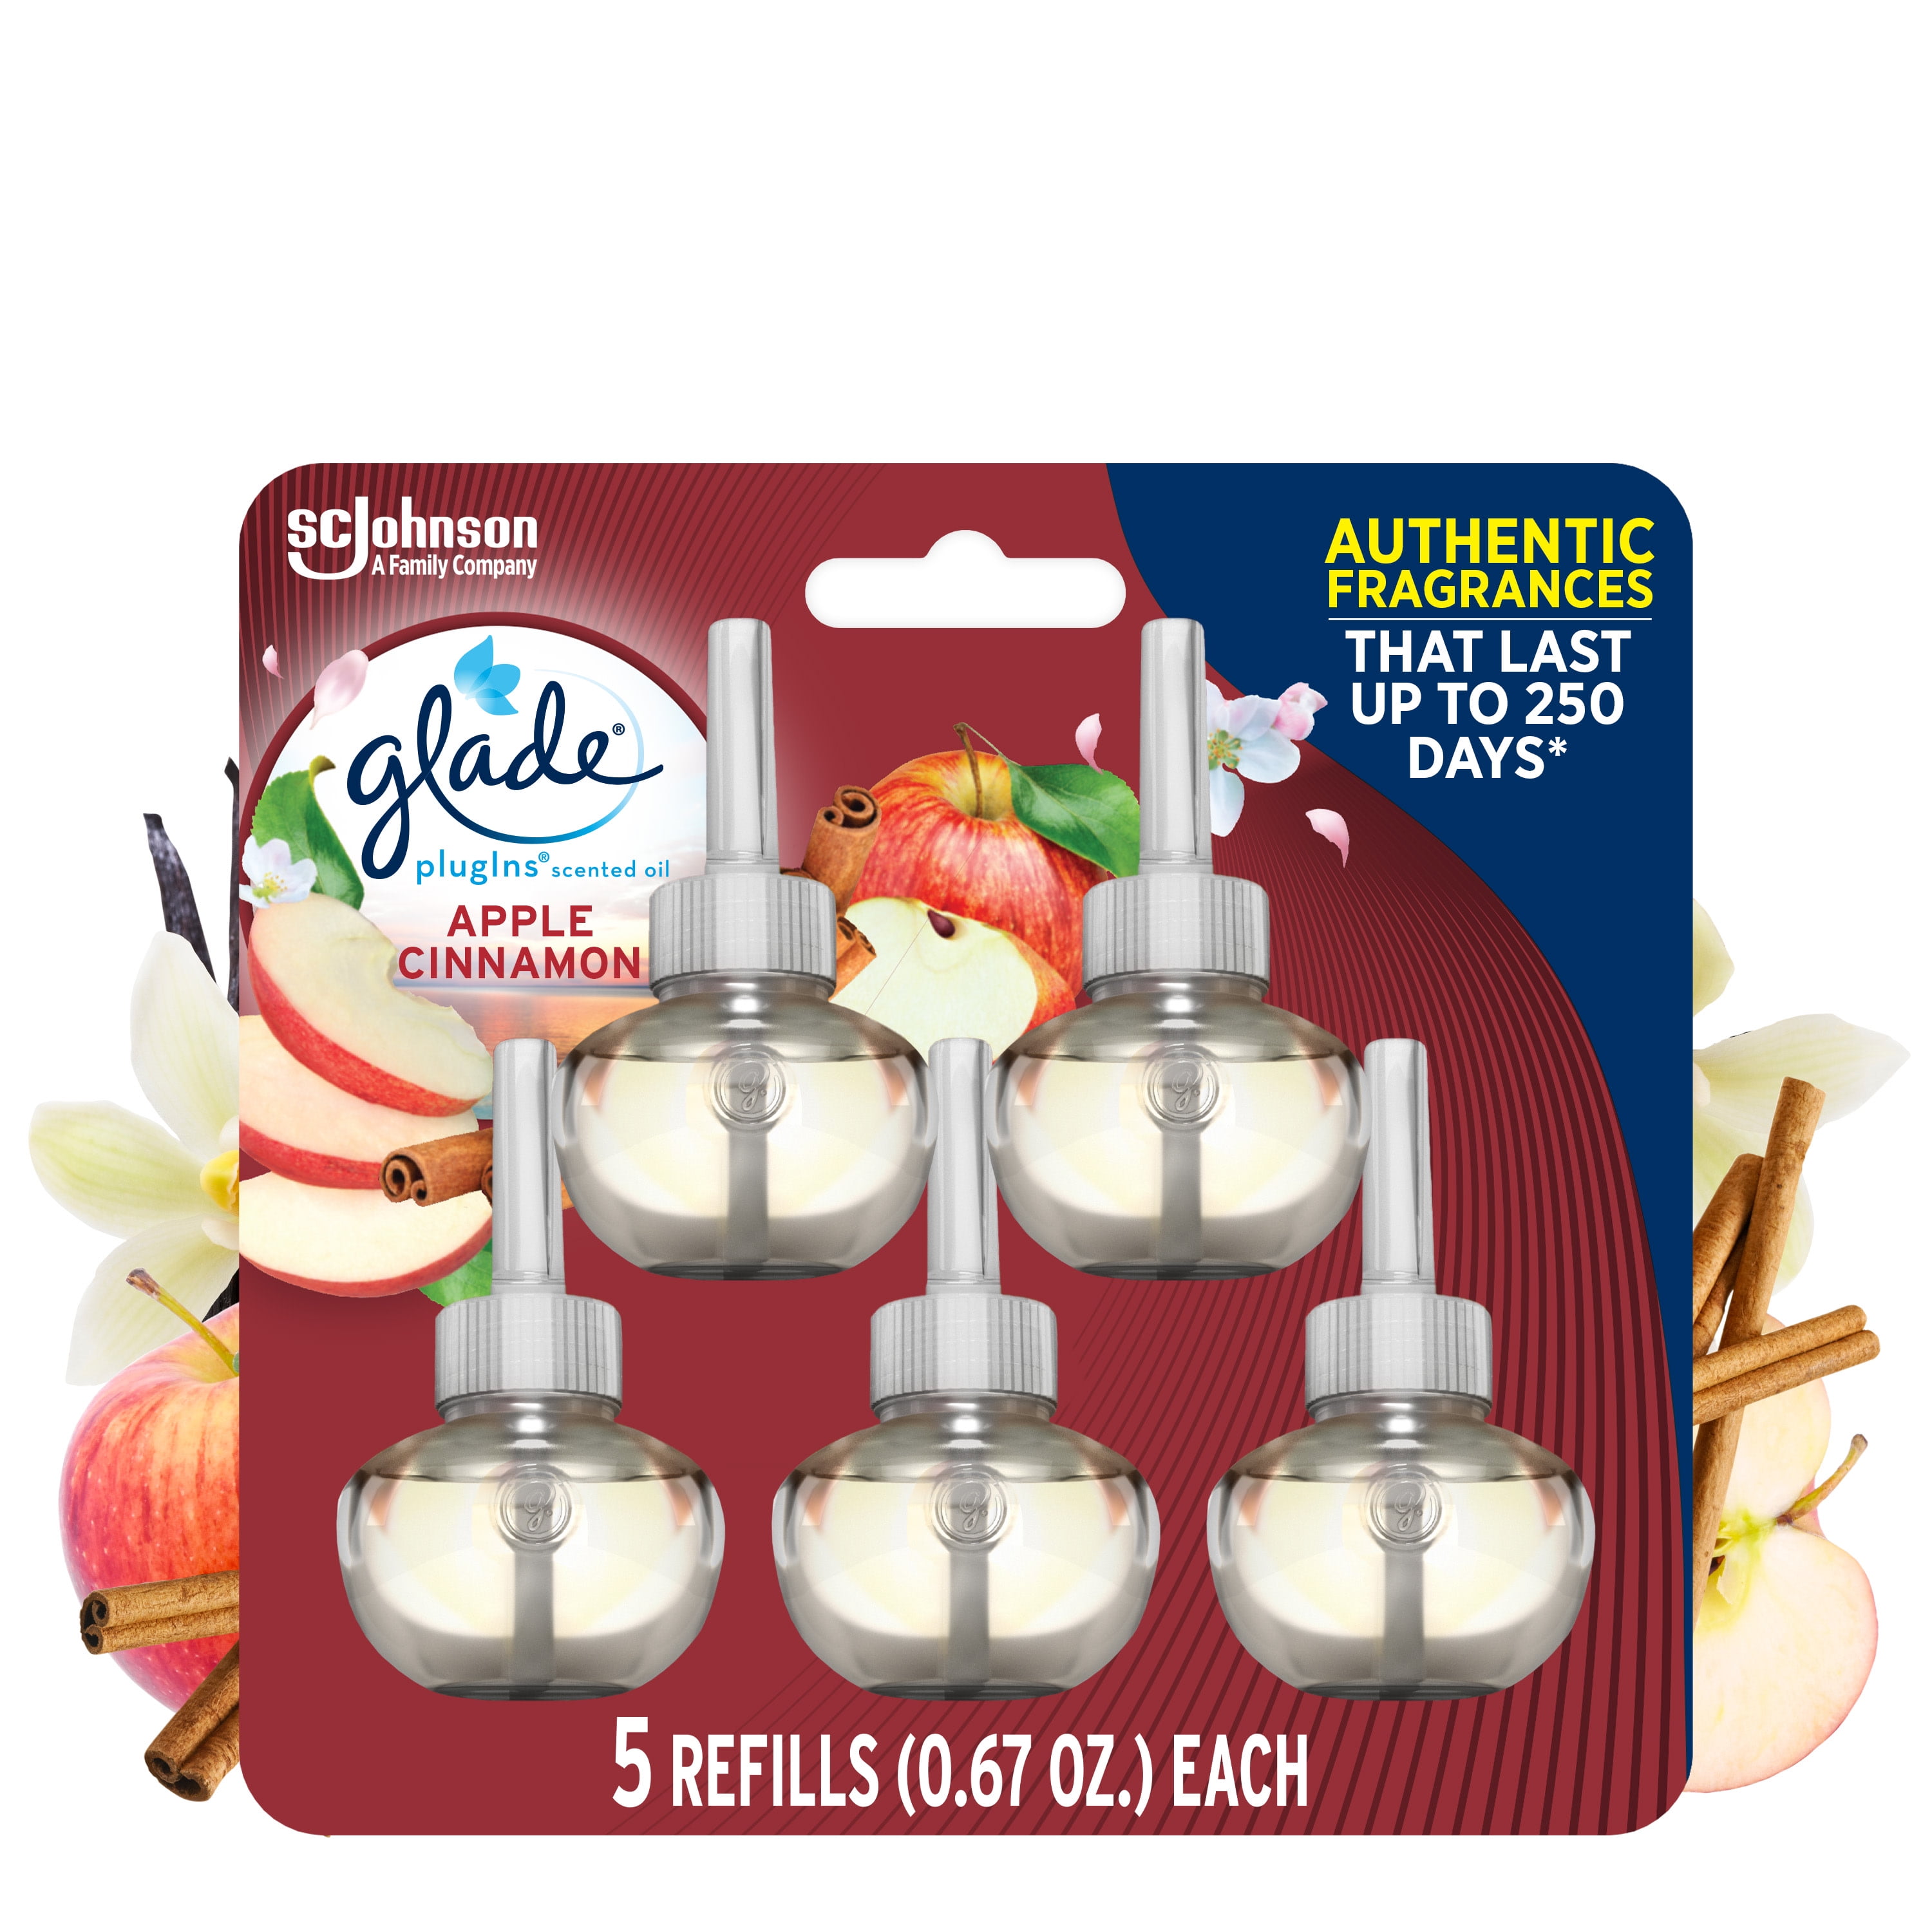 Glade PlugIns Refill 5 CT, Apple Cinnamon, 3.35 FL. OZ. Total, Scented Oil Air Freshener